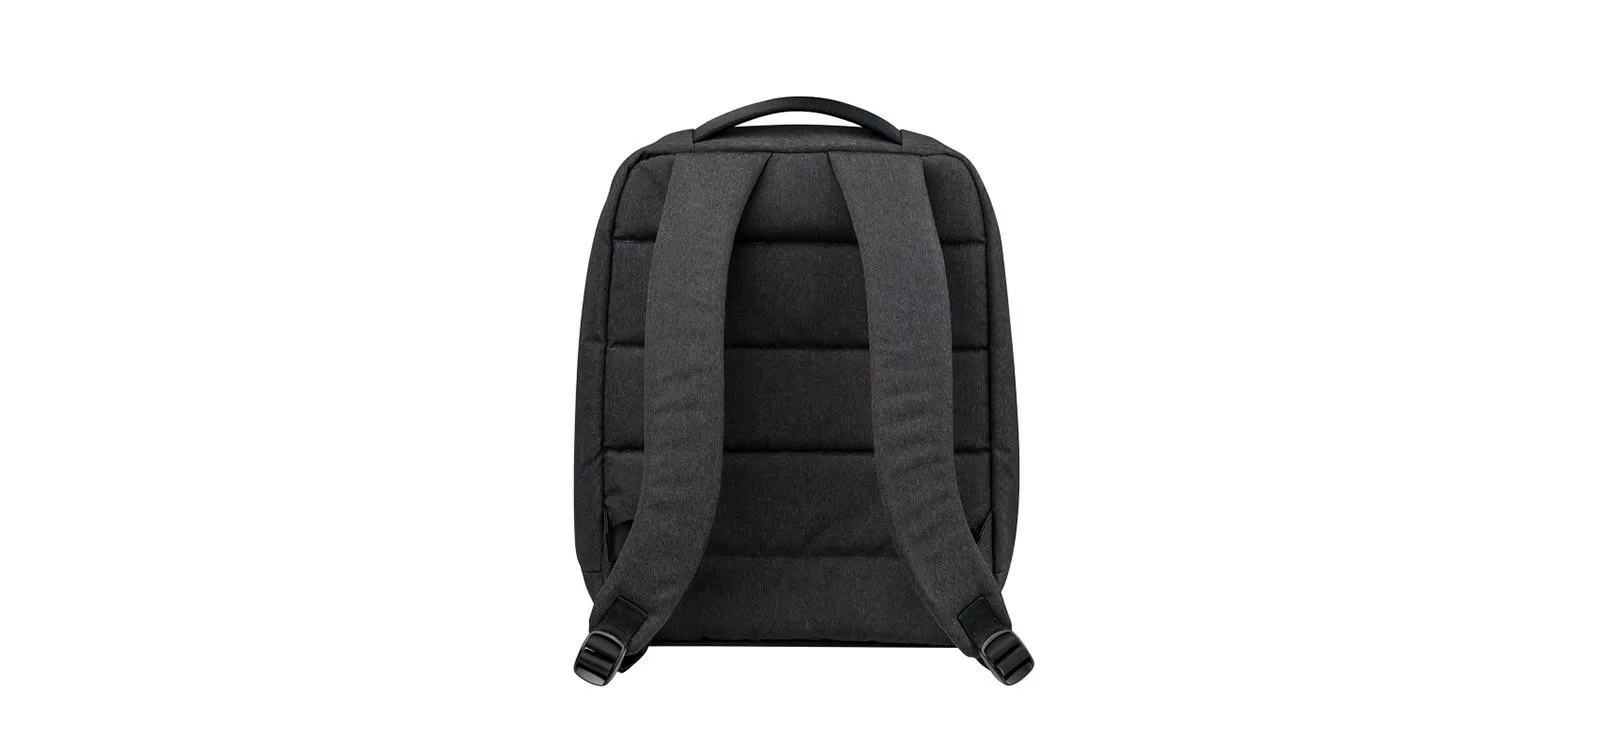 Фото Рюкзак Xiaomi Mi Minimalist Backpack Urban Life Style 300х140x390 grey  00-00002685 со склада магазина СпортСЕ